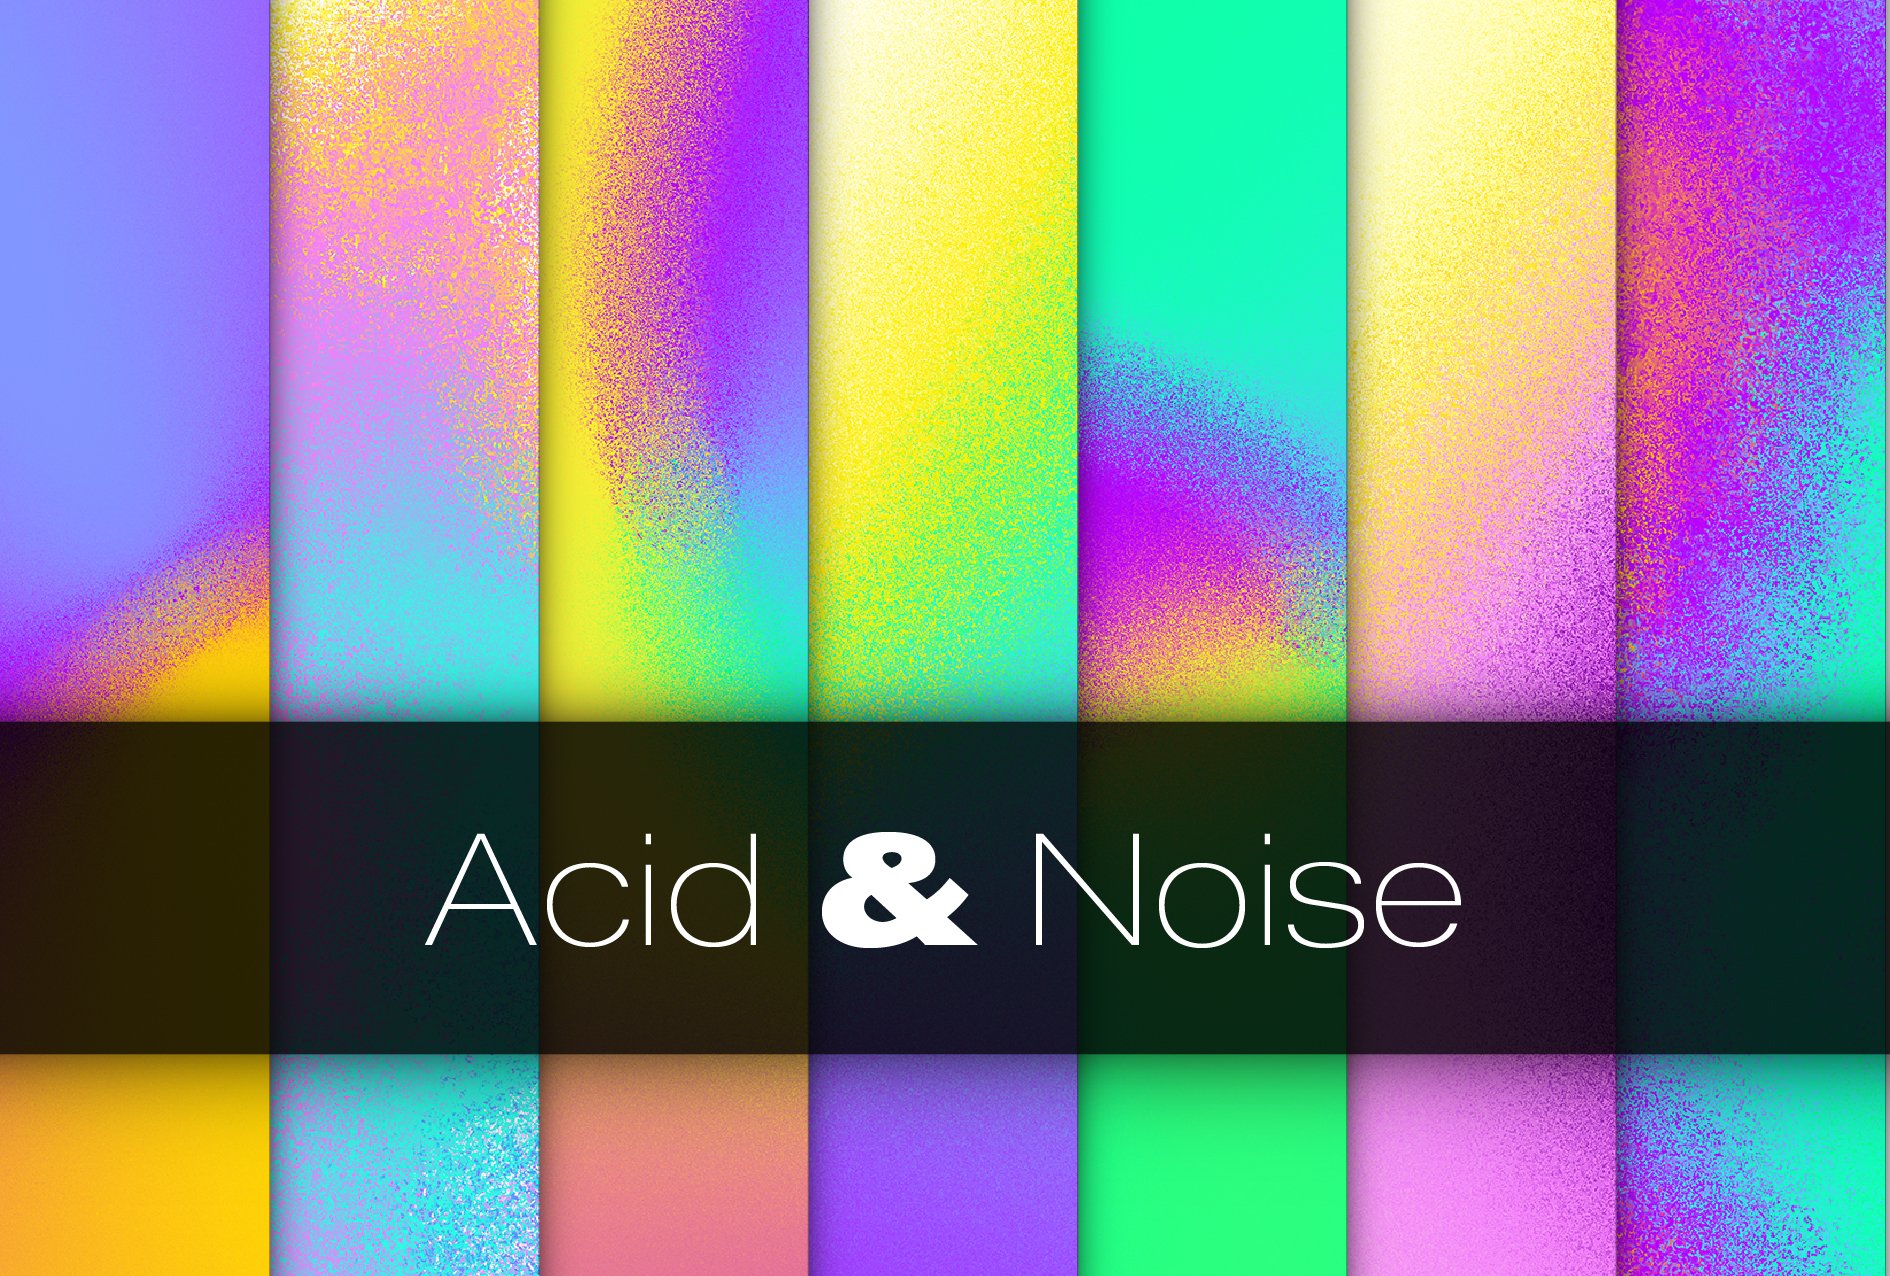 20 vivid noise textures cover image.